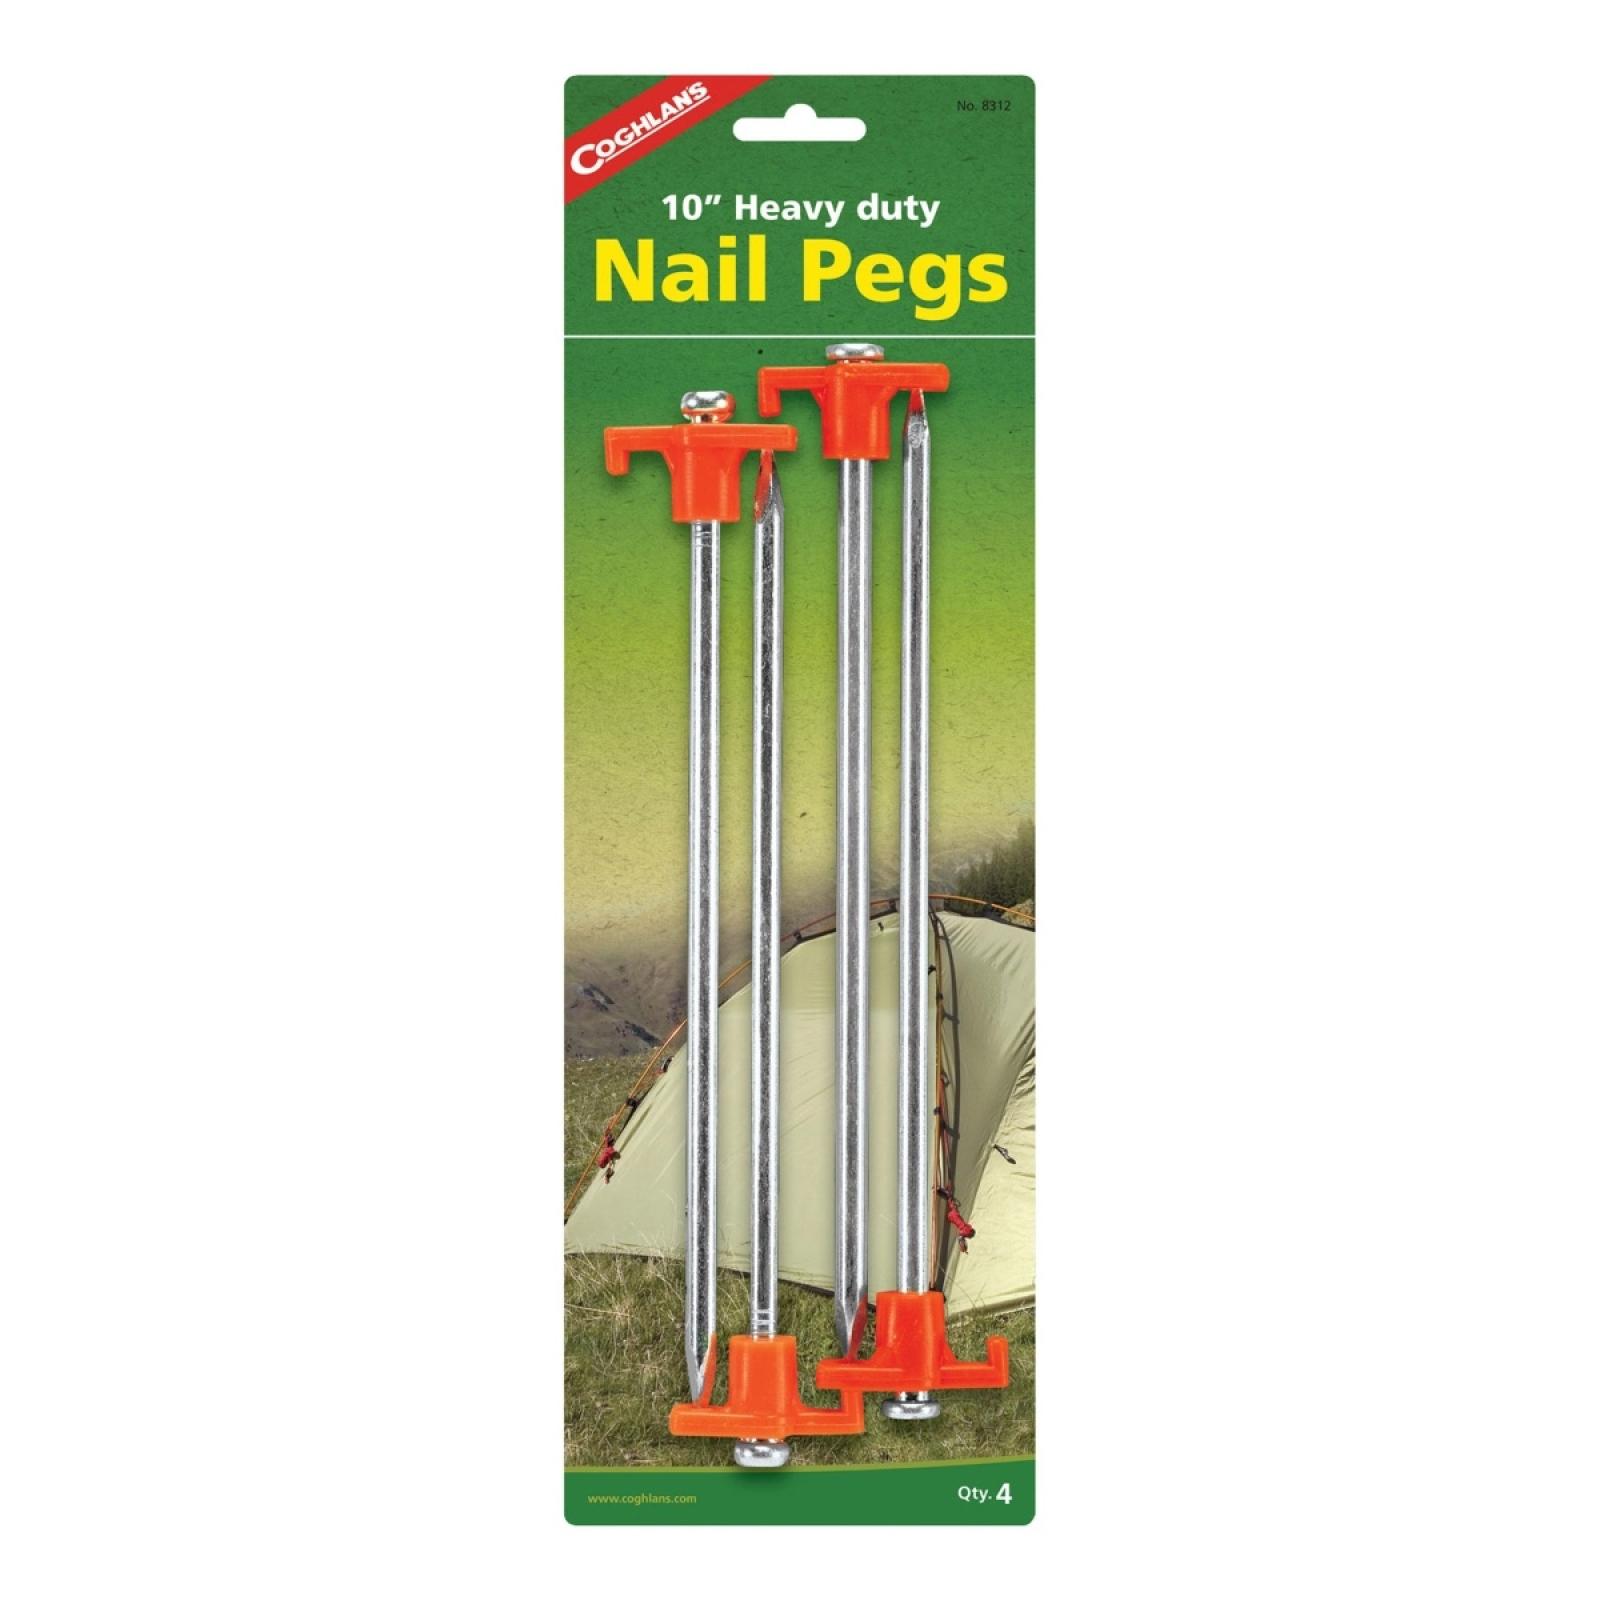 Coghlan Nail Pegs 10" 4 Pack